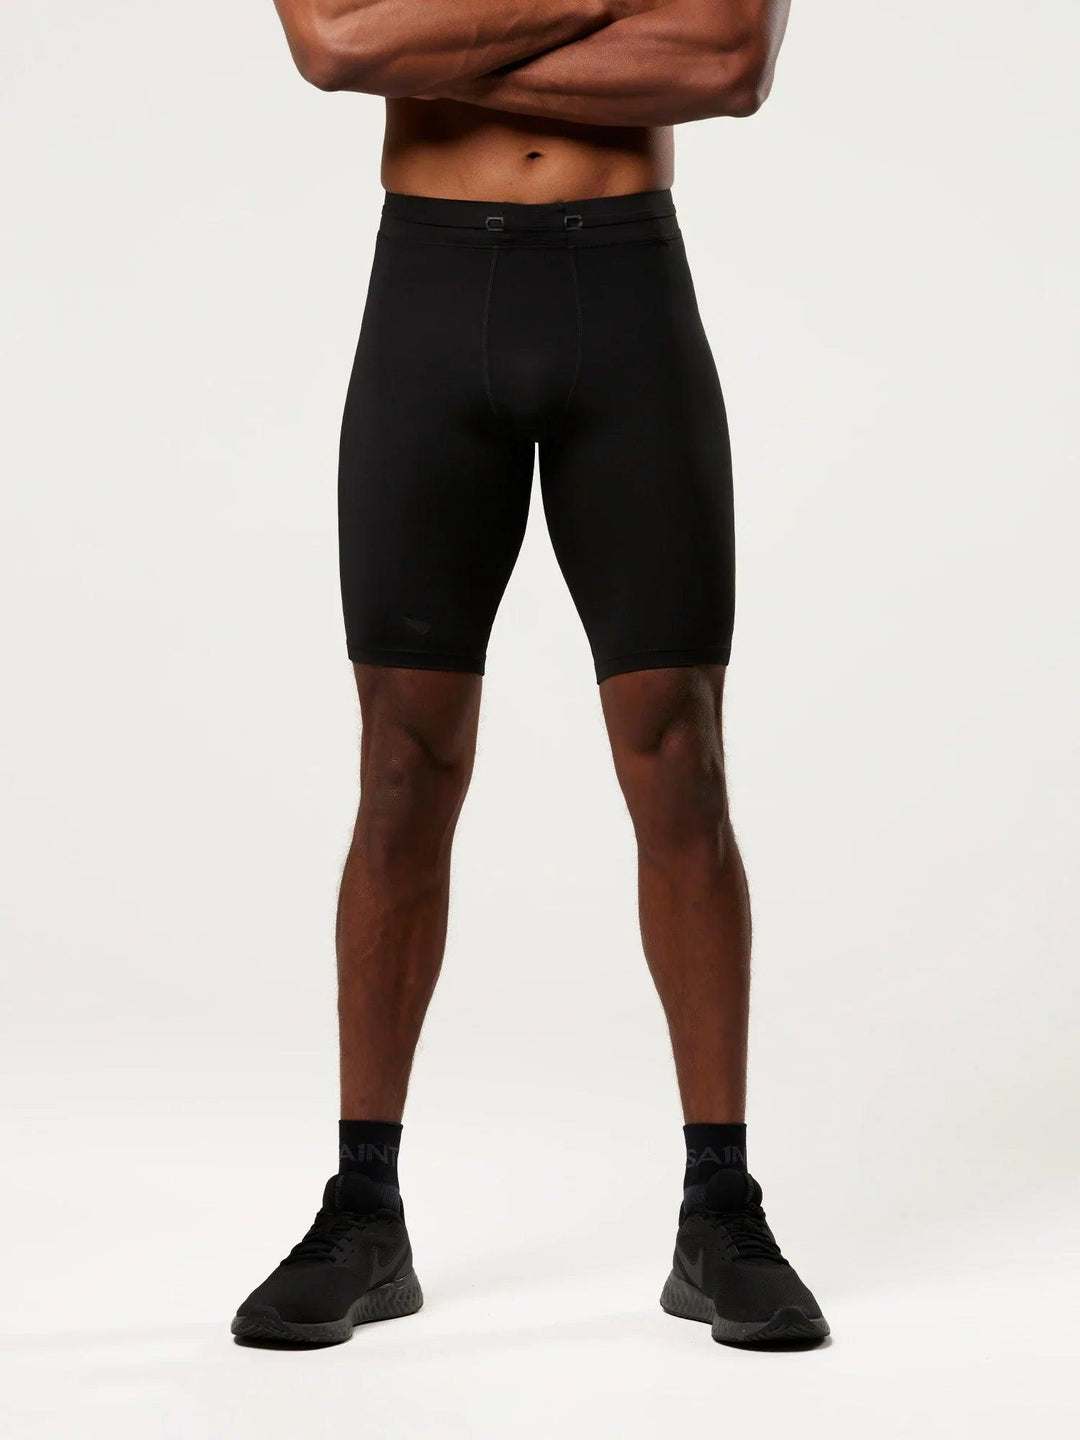 Nike Pro Men's Compression Short - Nike Apparel